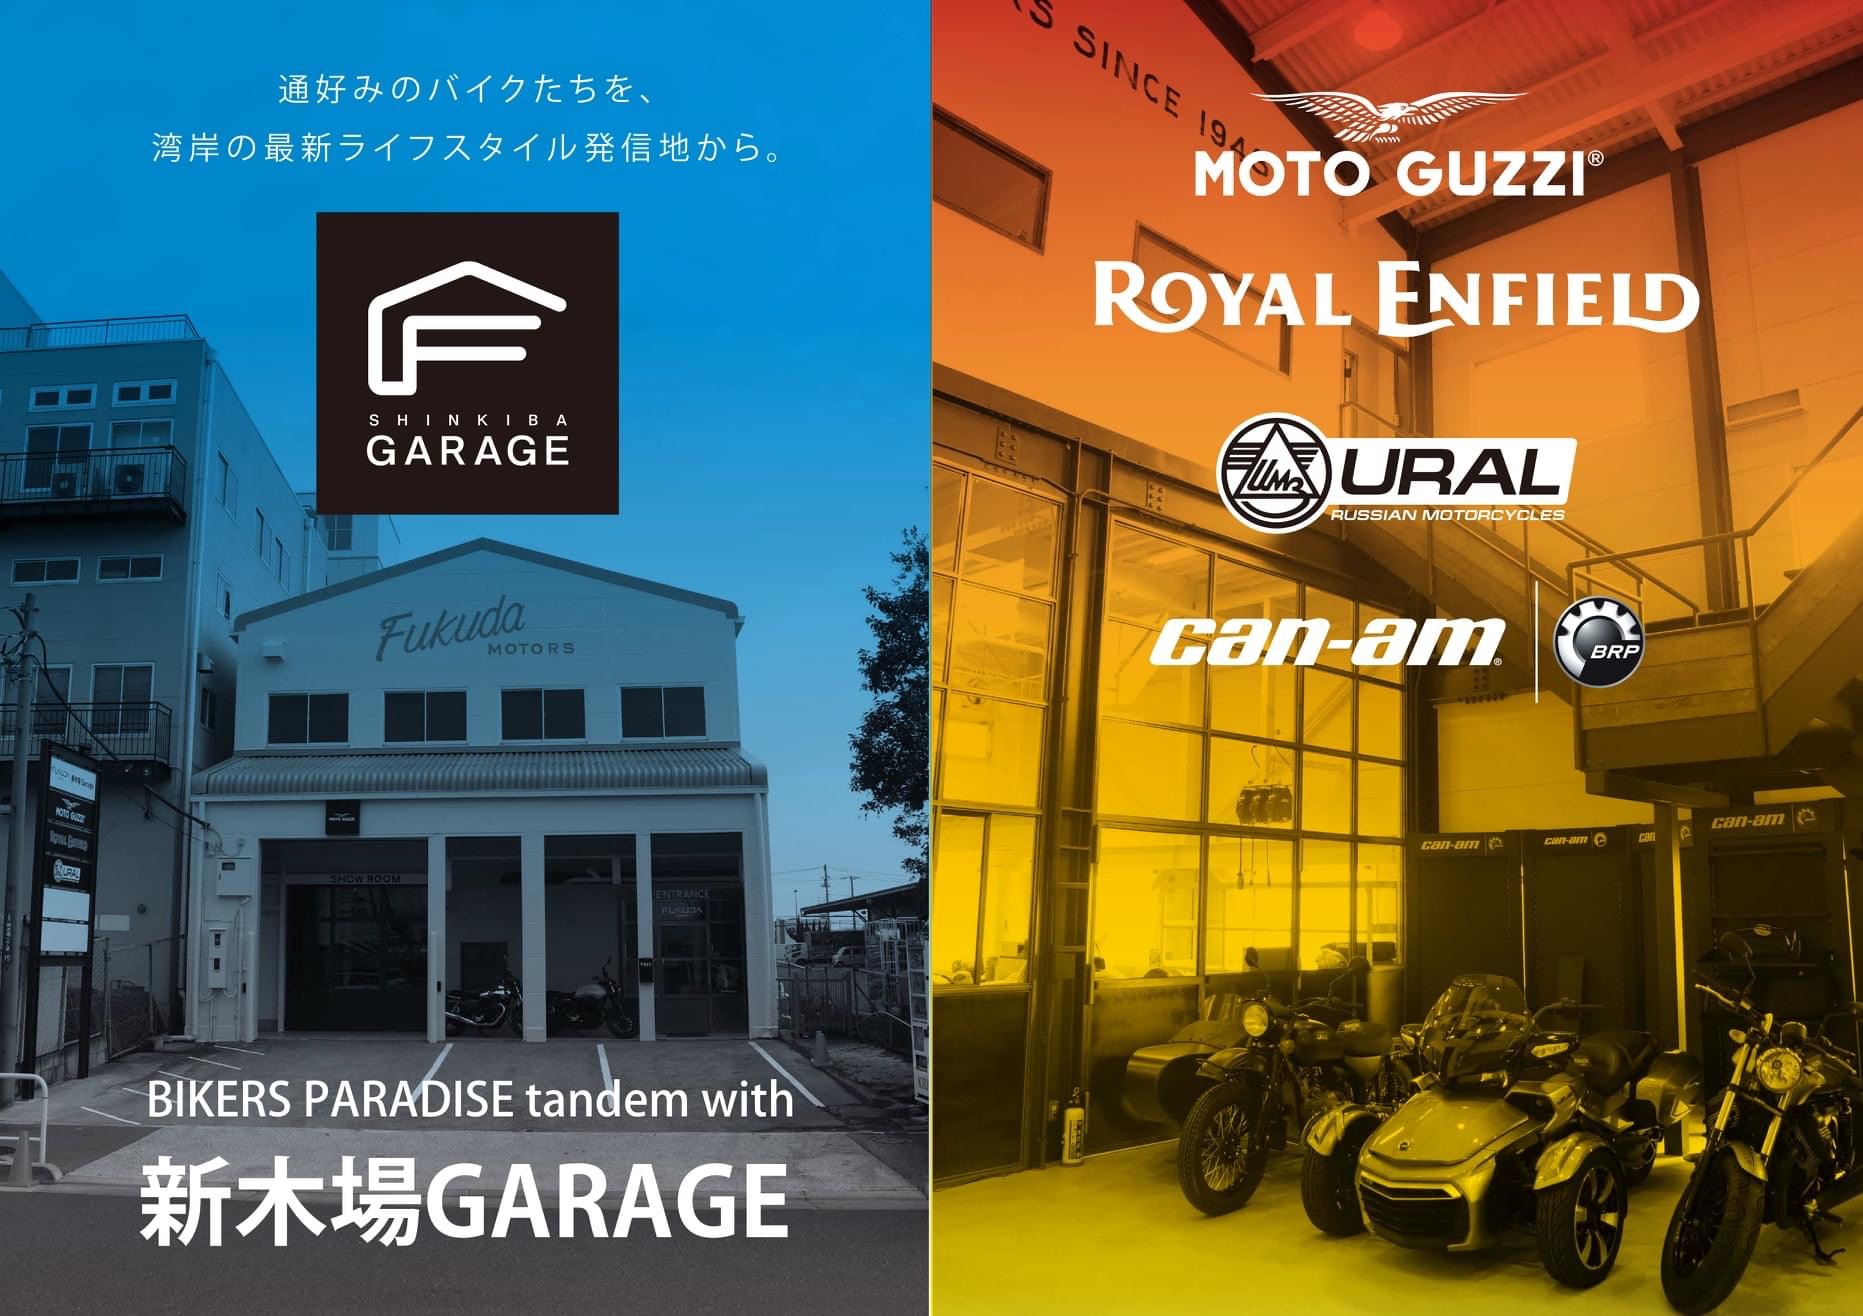 November 2020｜Bikers Paradise tandem with 新木場GARAGE - Bikers